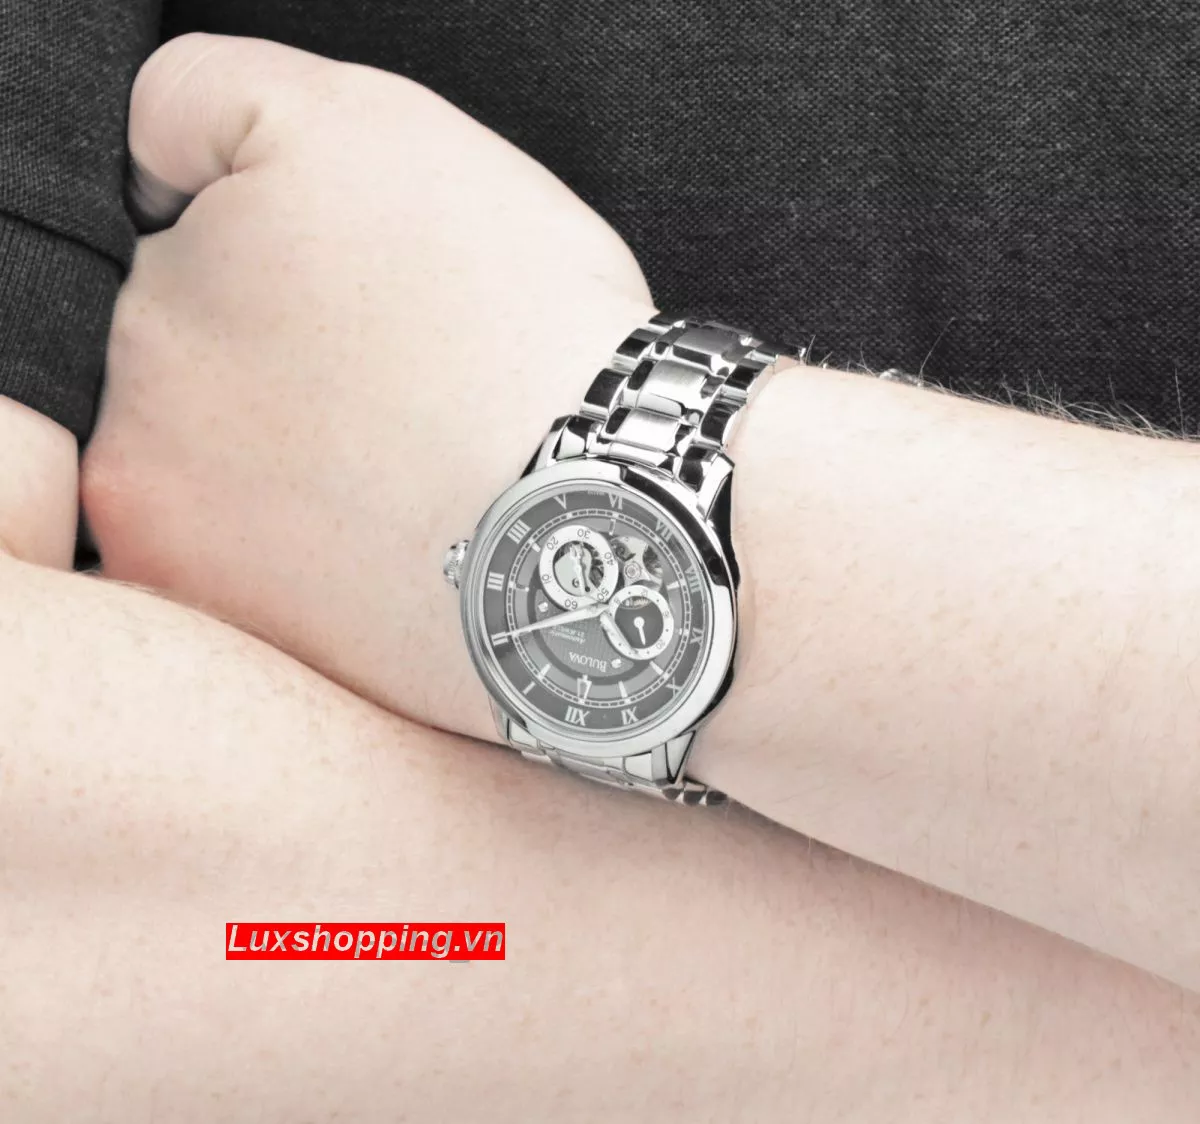  Bulova Series 120 Automatic Aperture Watch 41mm